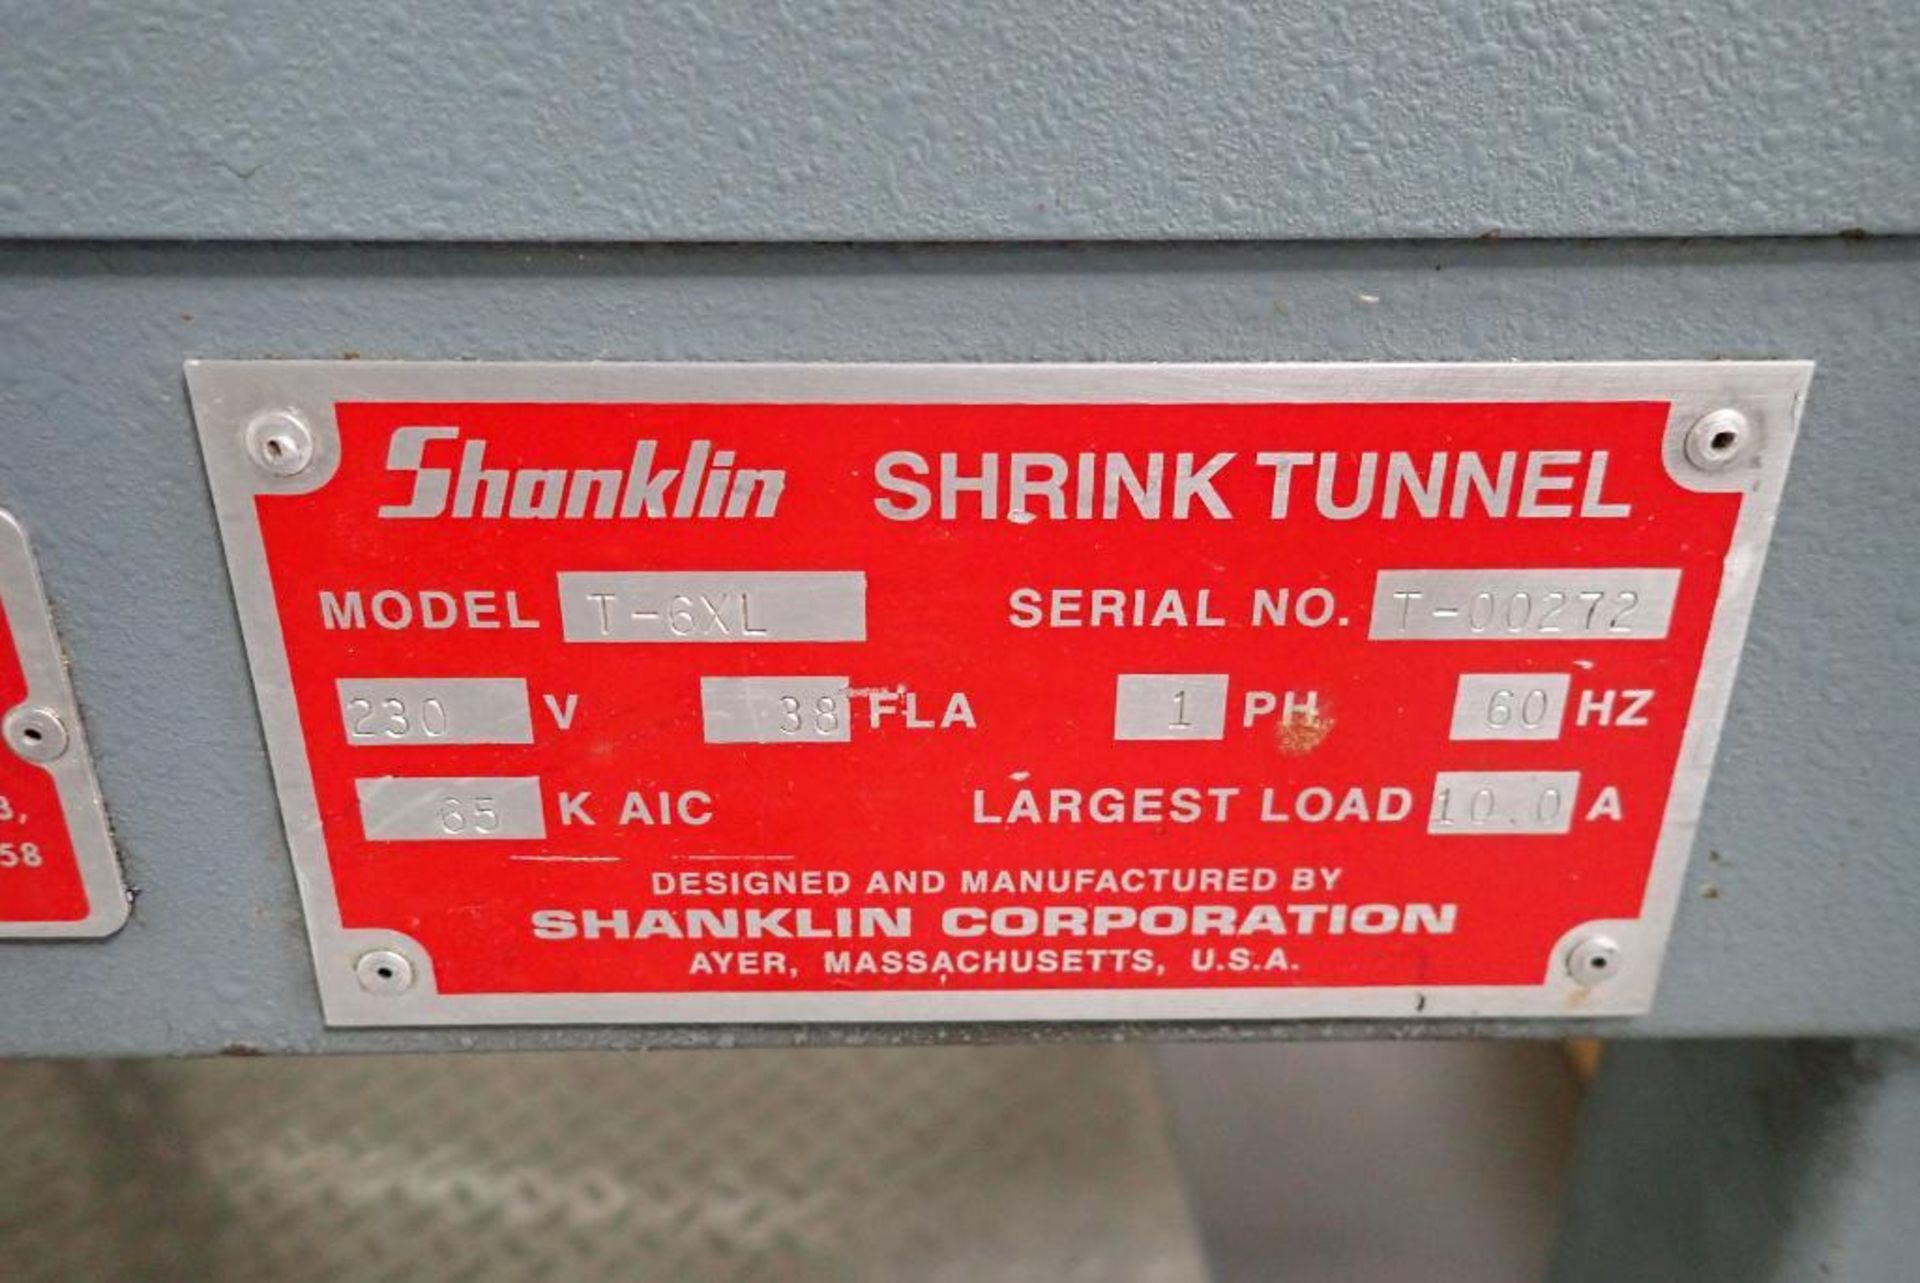 Shanklin heat shrink tunnel - Image 9 of 12